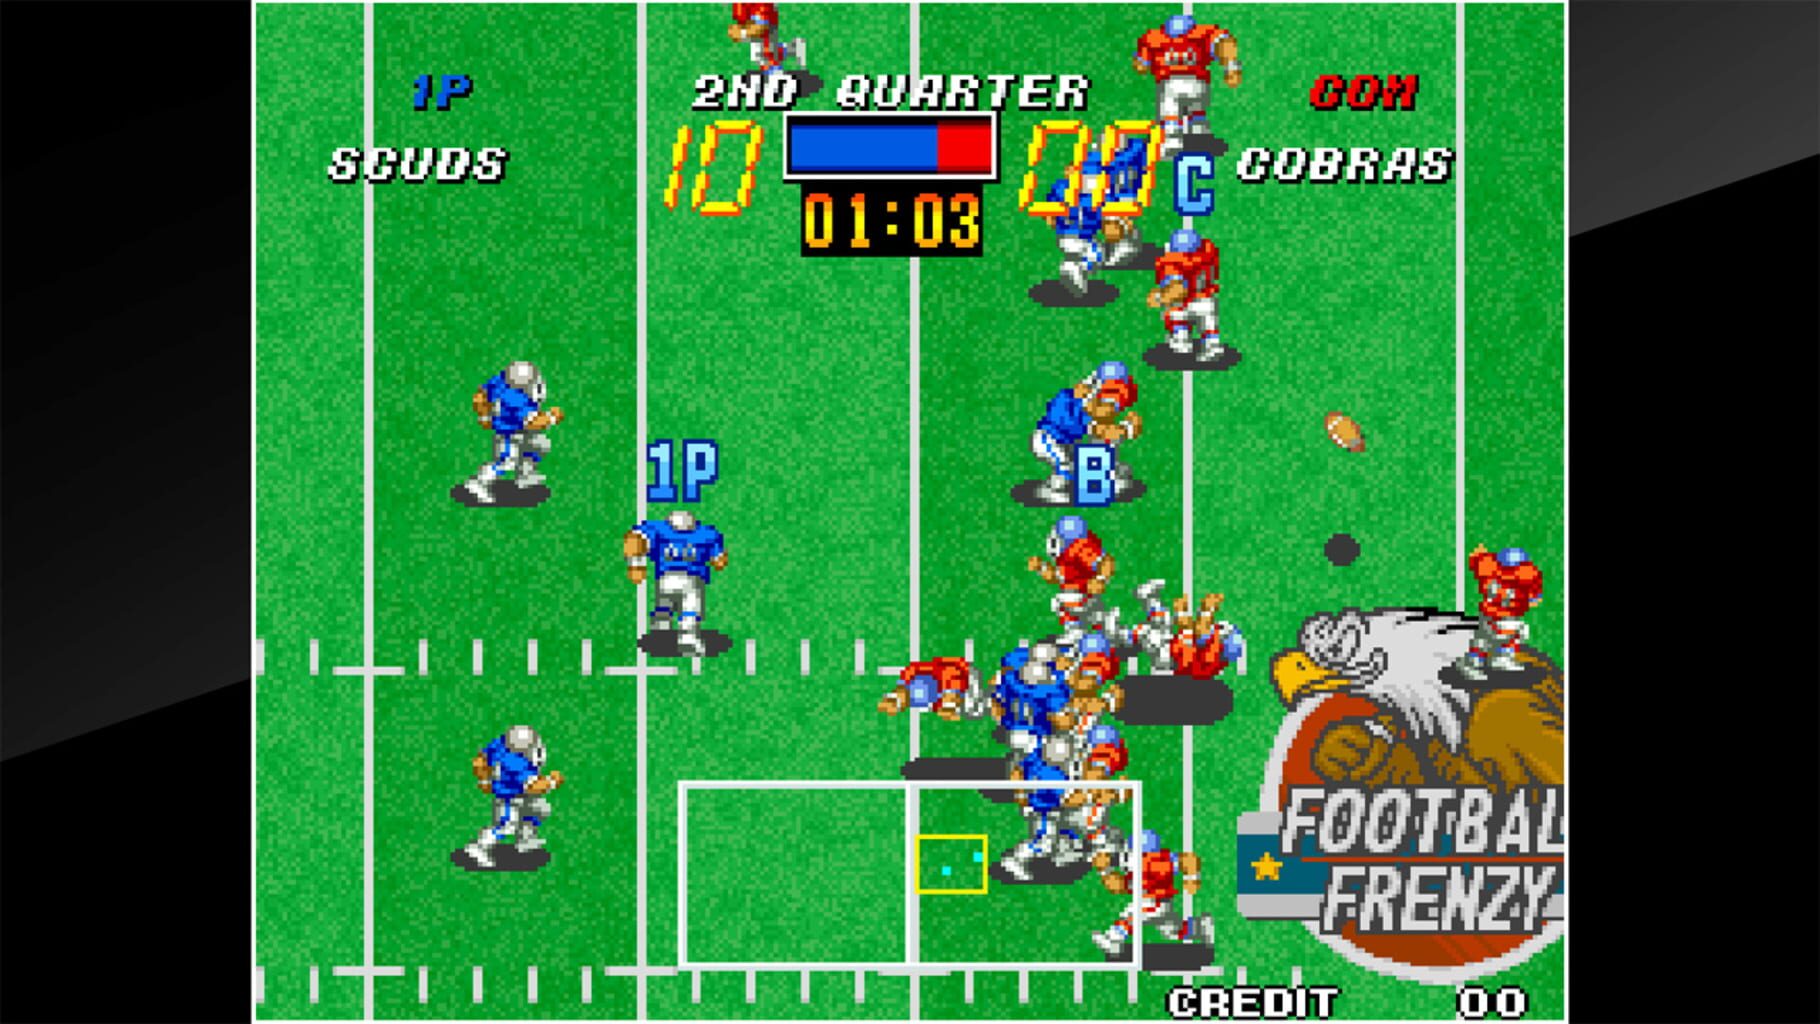 ACA Neo Geo: Football frenzy screenshot